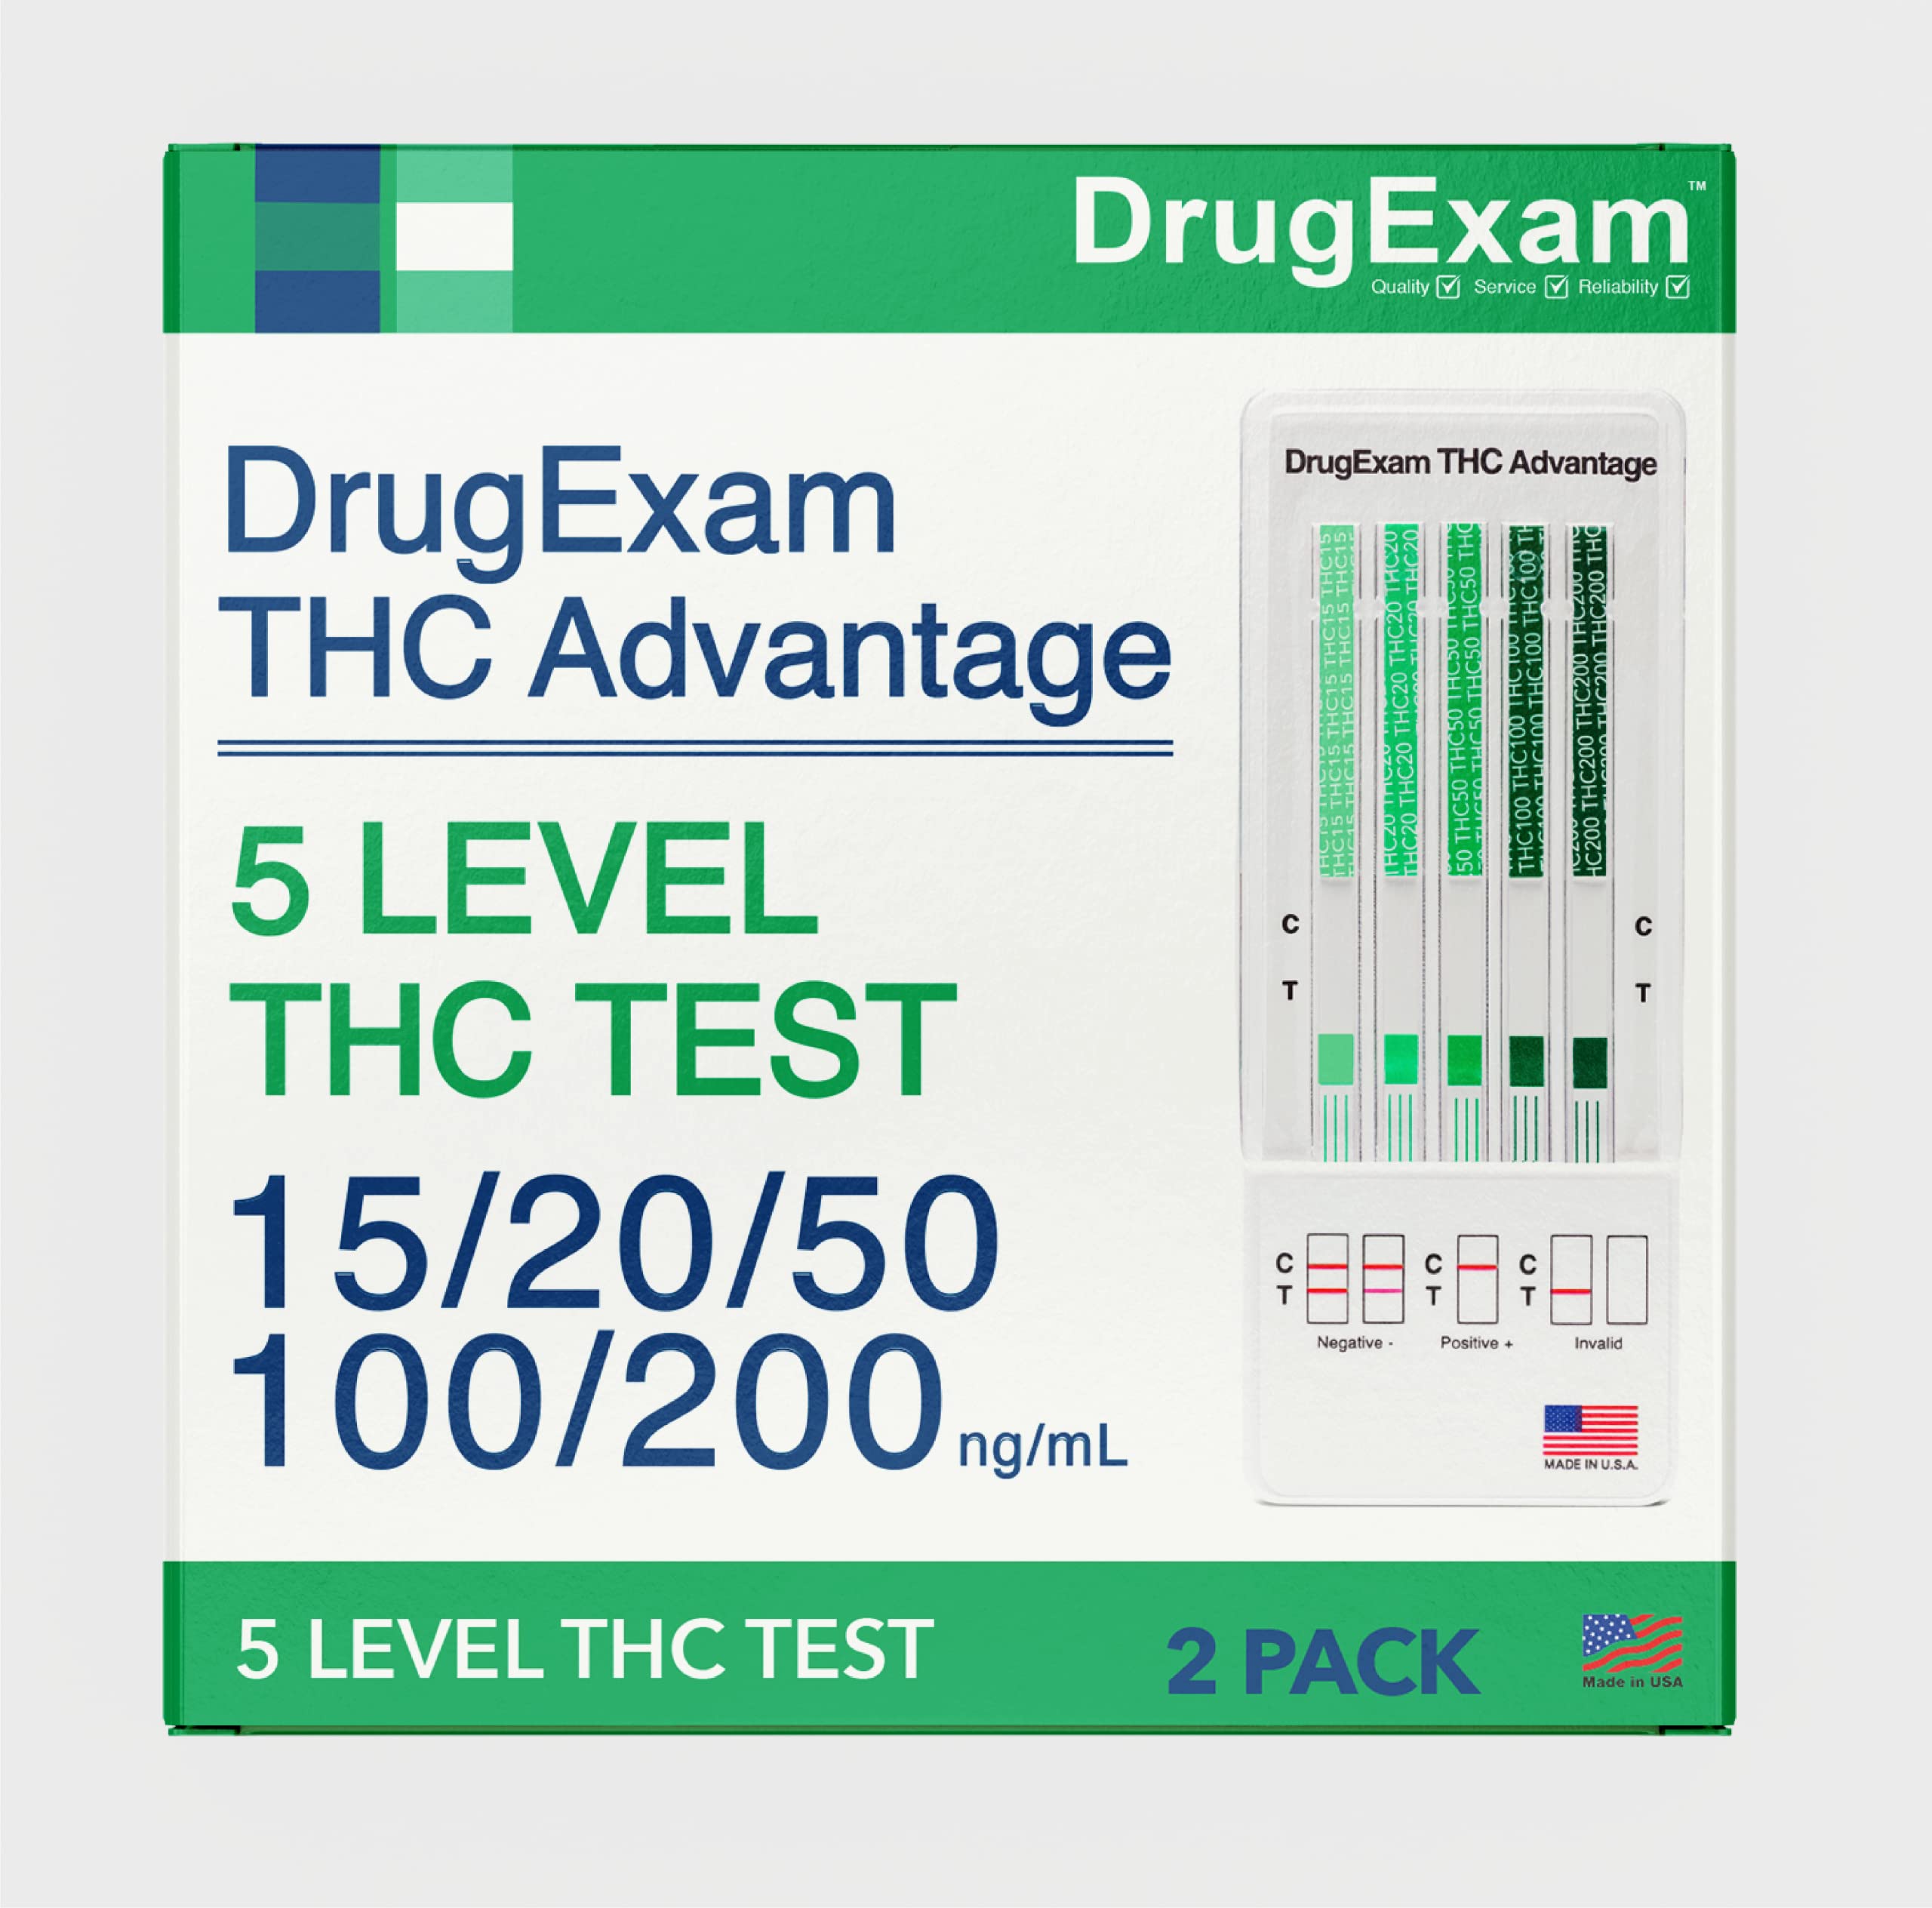 2 Pack - DrugExam THC Advantage Made in USA Multi Level Marijuana Home  Urine Test Kit.Highly Sensitive THC 5 Level Drug Test Kit. Detects at 15 ng/ mL, 20 ng/mL, 50 ng/mL, 100